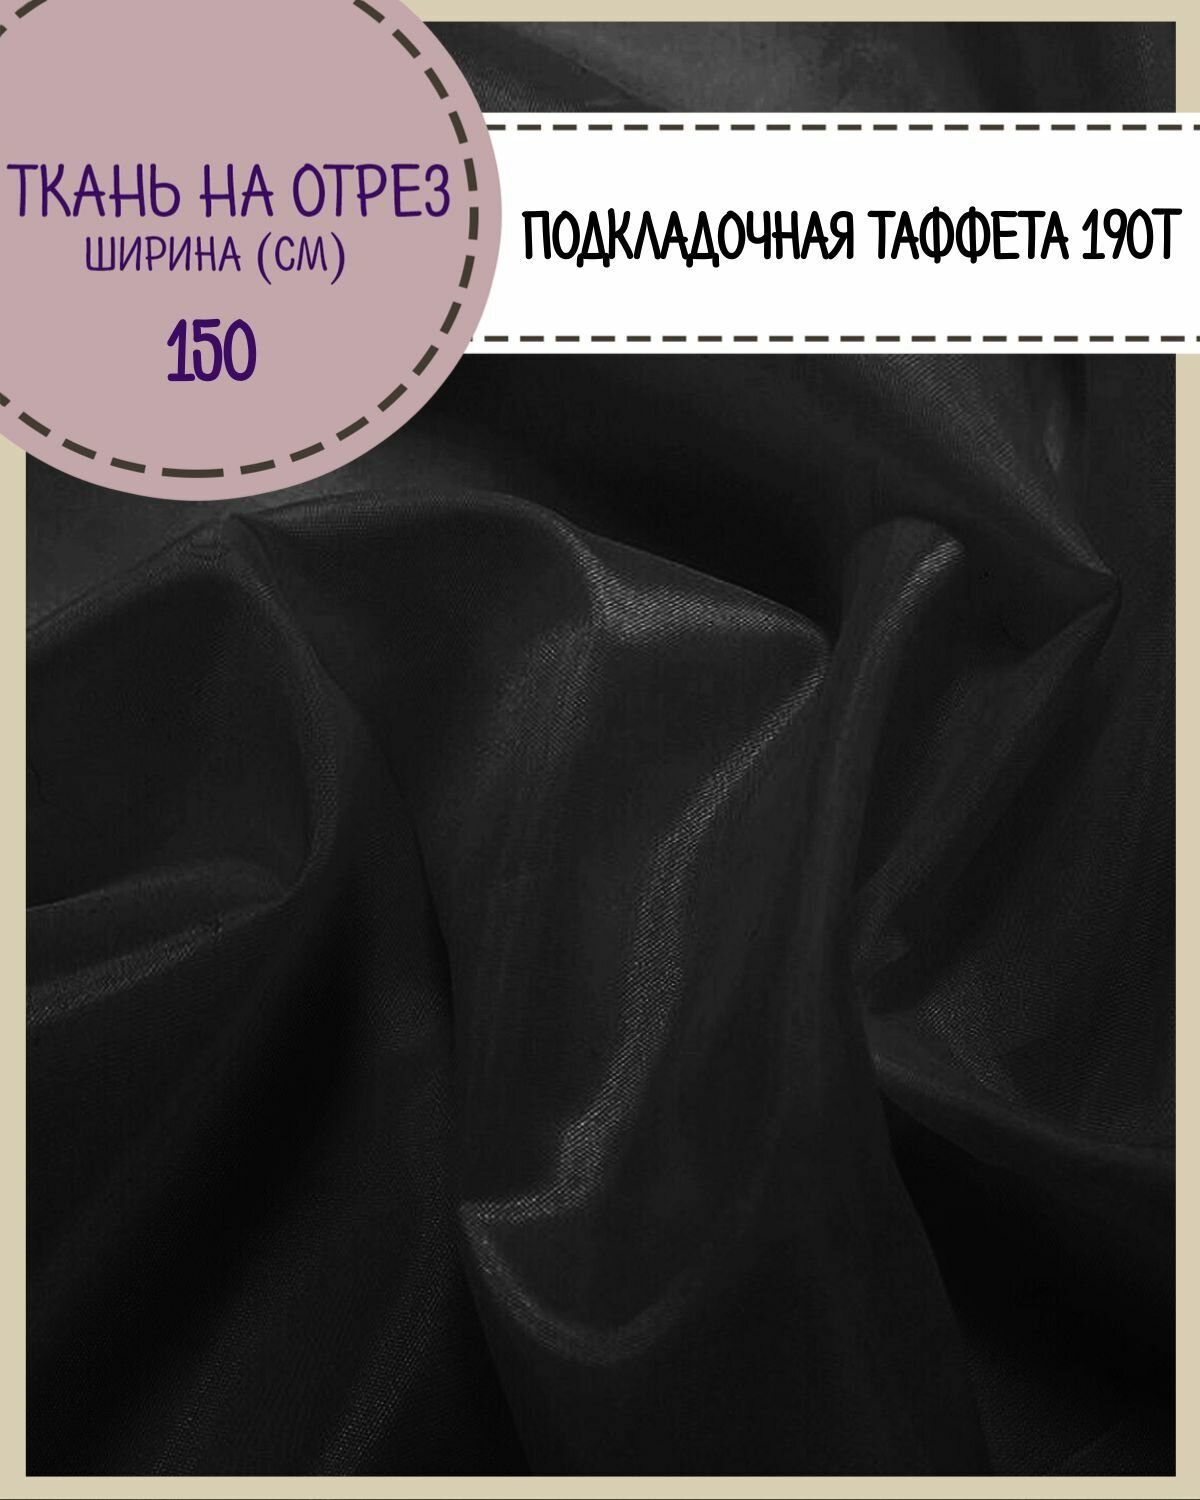 Ткань подкладочная Таффета 190Т, ш-150 см, цвет черный, на отрез, цена за 2 пог. метра